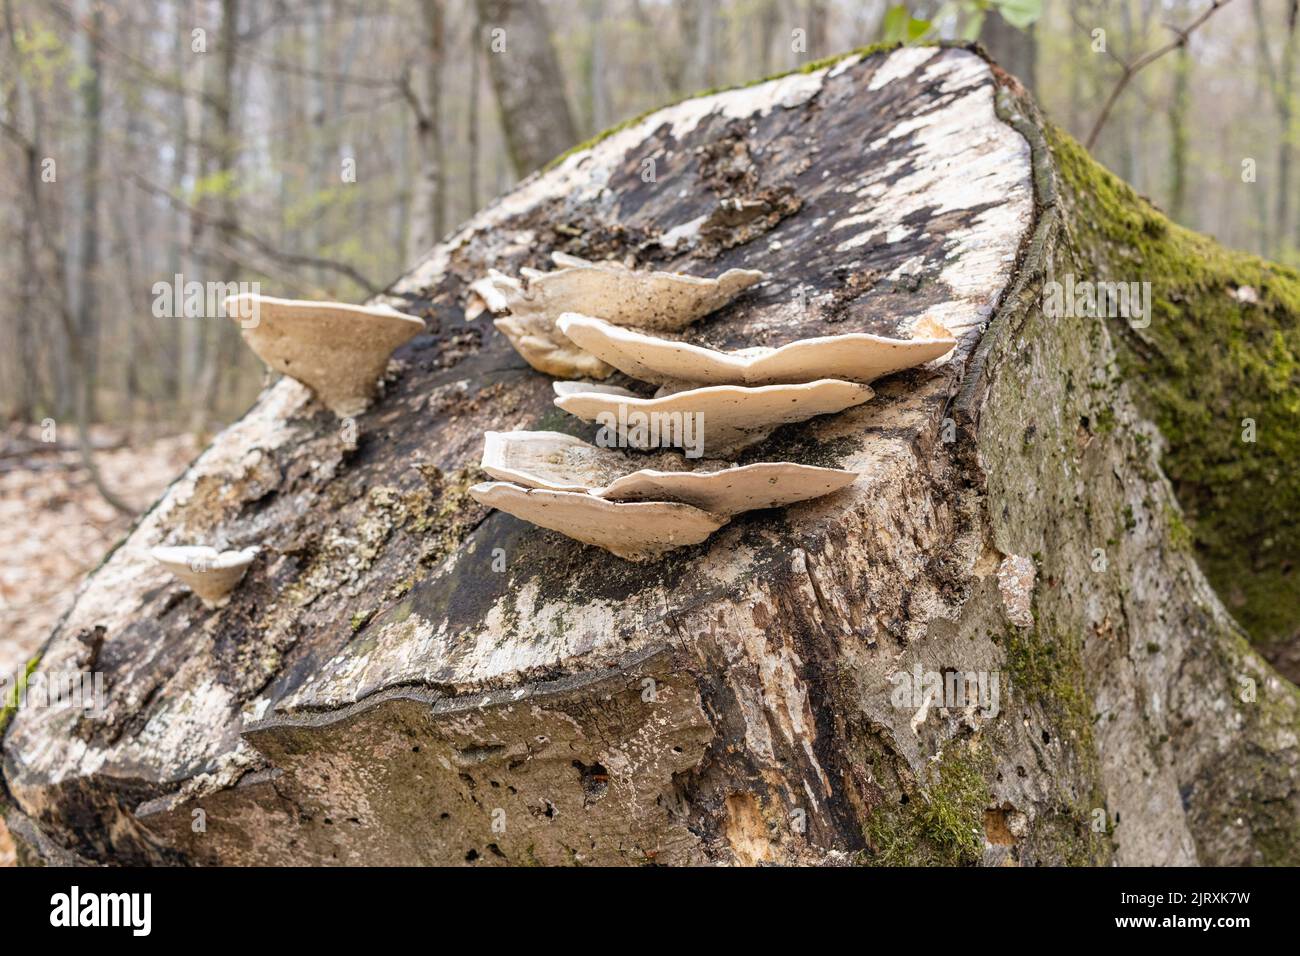 Large parasitic mushroom that grows on tree trunks. Tinder fungus, hoof fungus, tinder conk, tinder polypore or ice man fungus Stock Photo